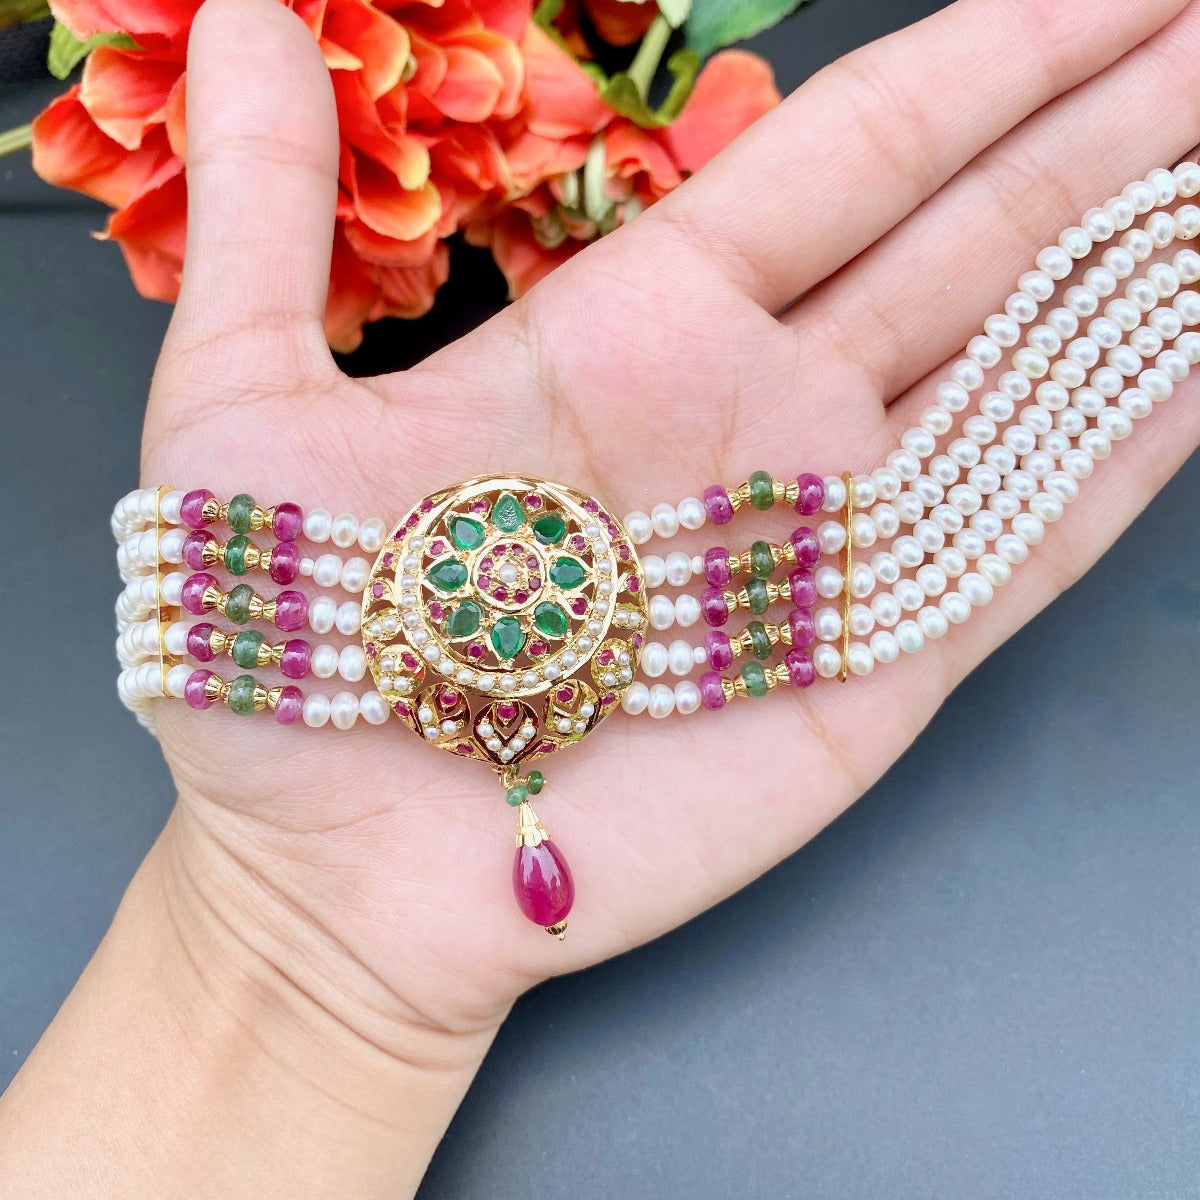 Gold Necklace Set Designs for Women under 2 lakhs